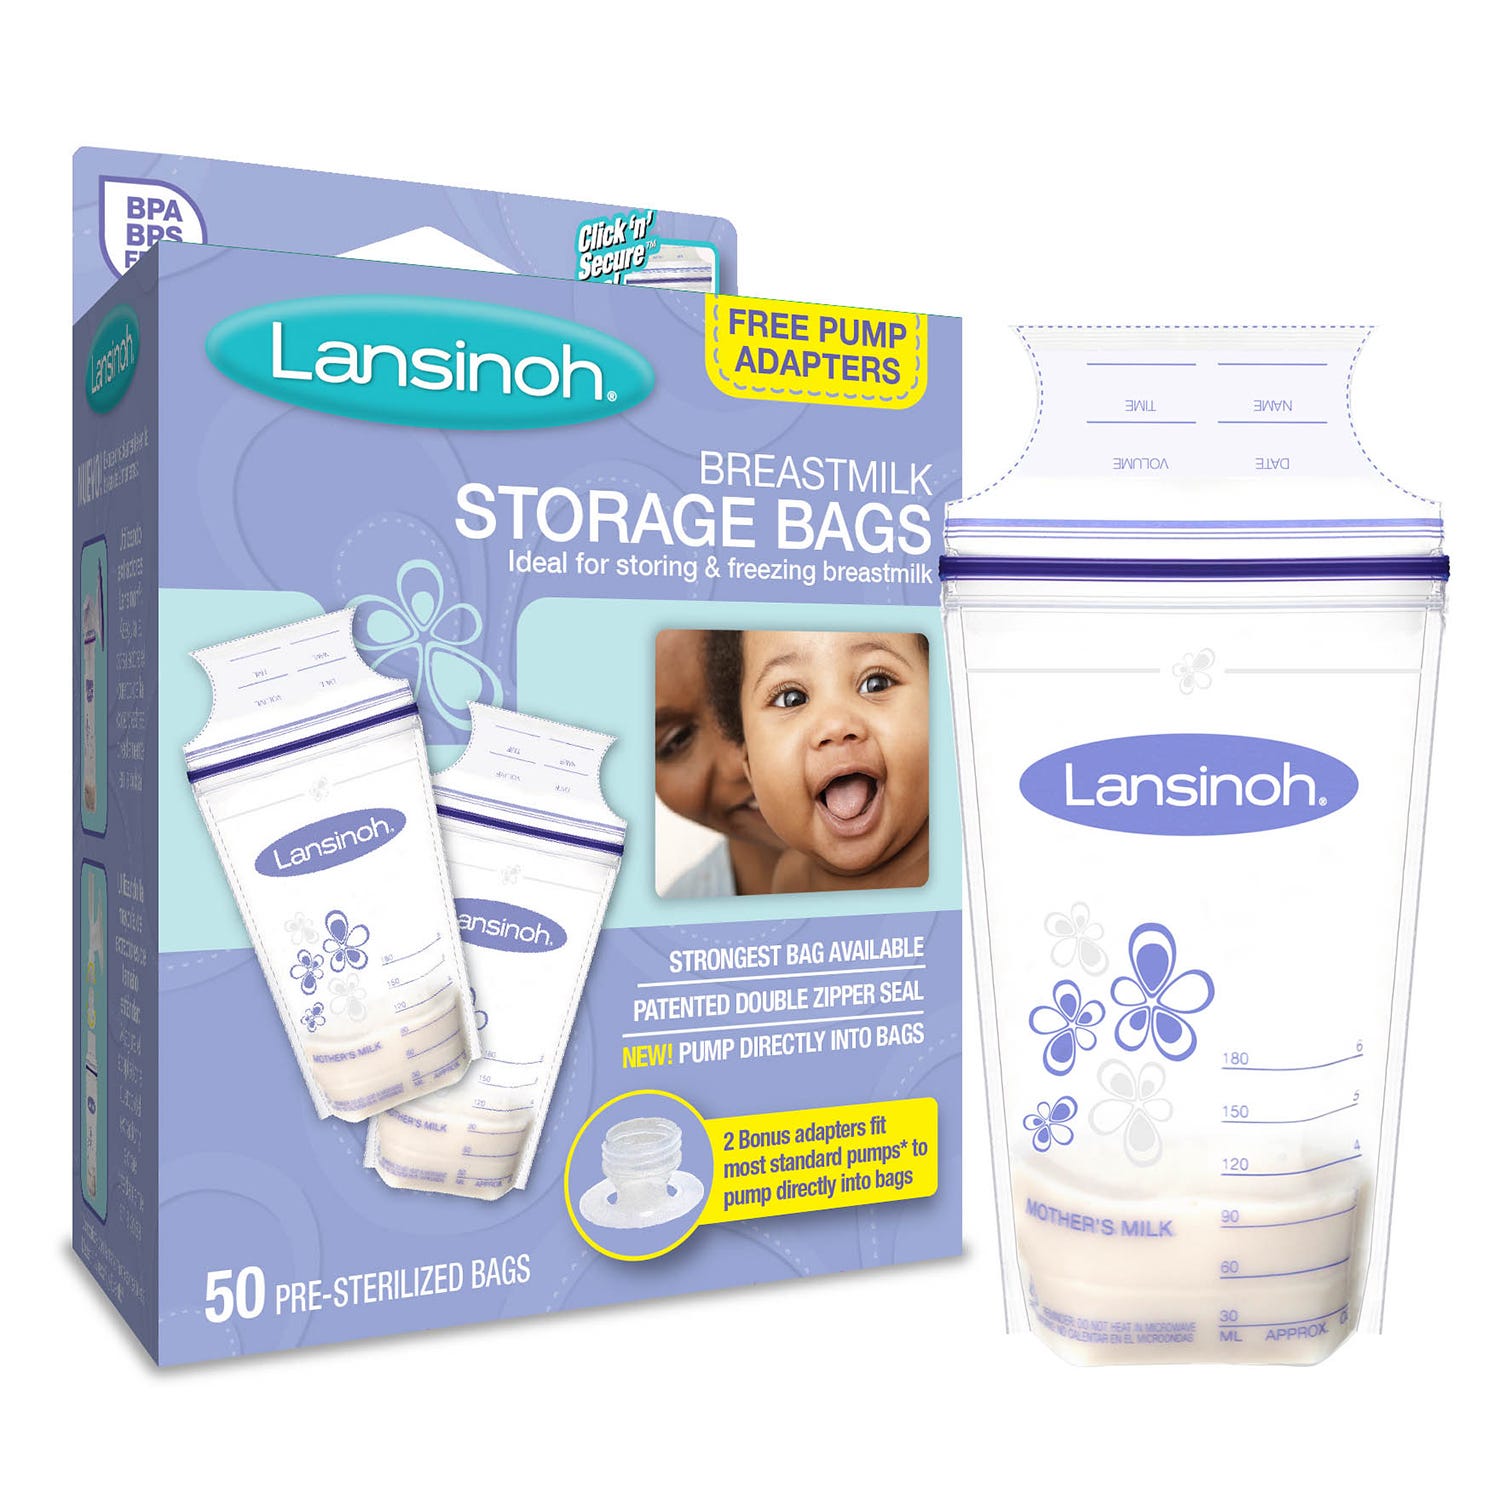 Lansinoh Milk Storage Bags Pack of 25